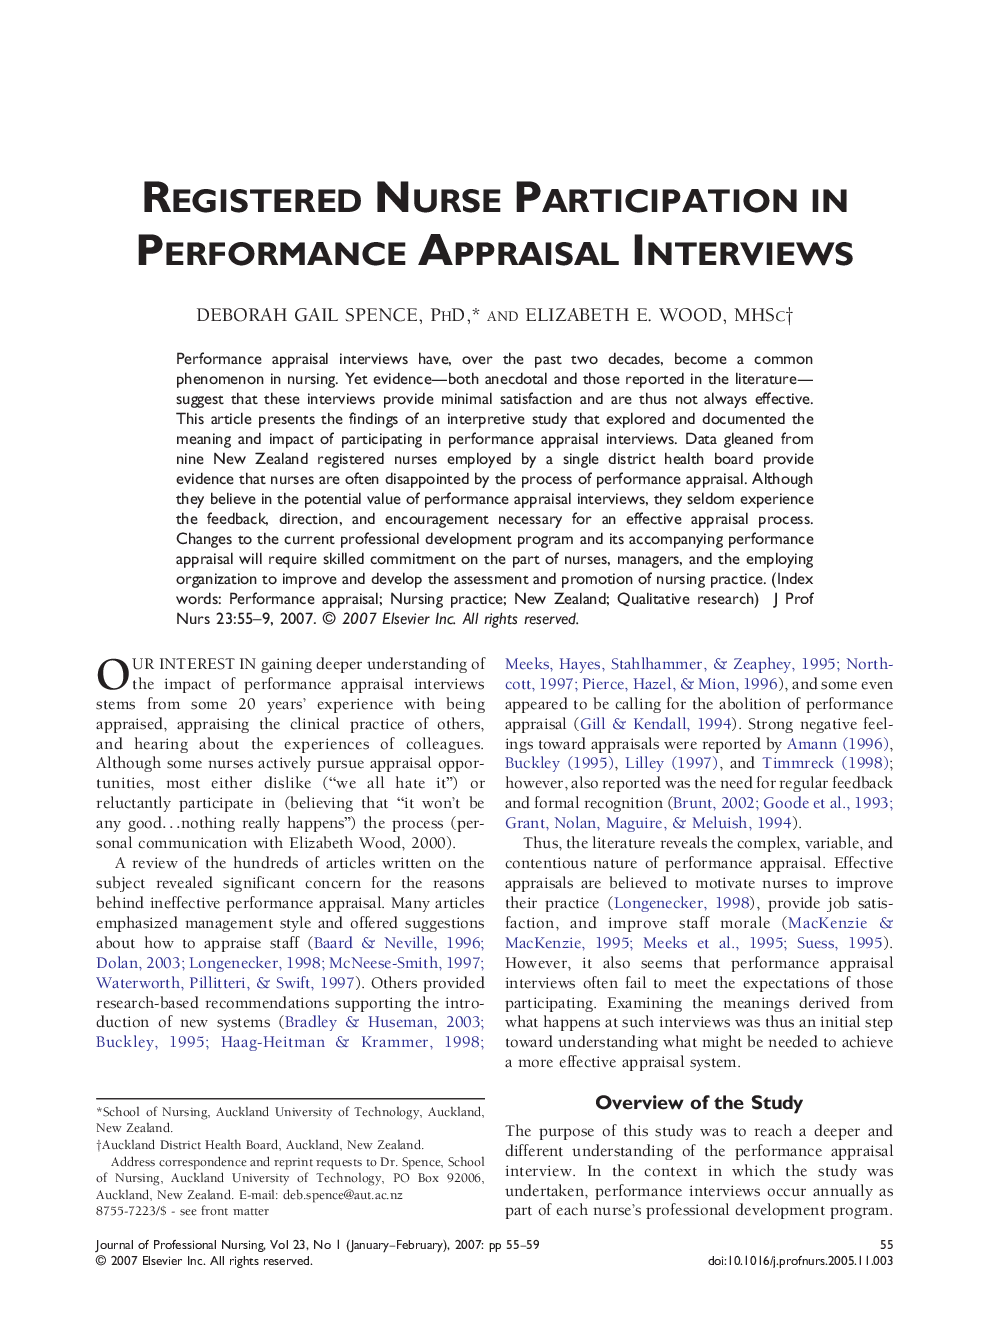 Registered Nurse Participation in Performance Appraisal Interviews